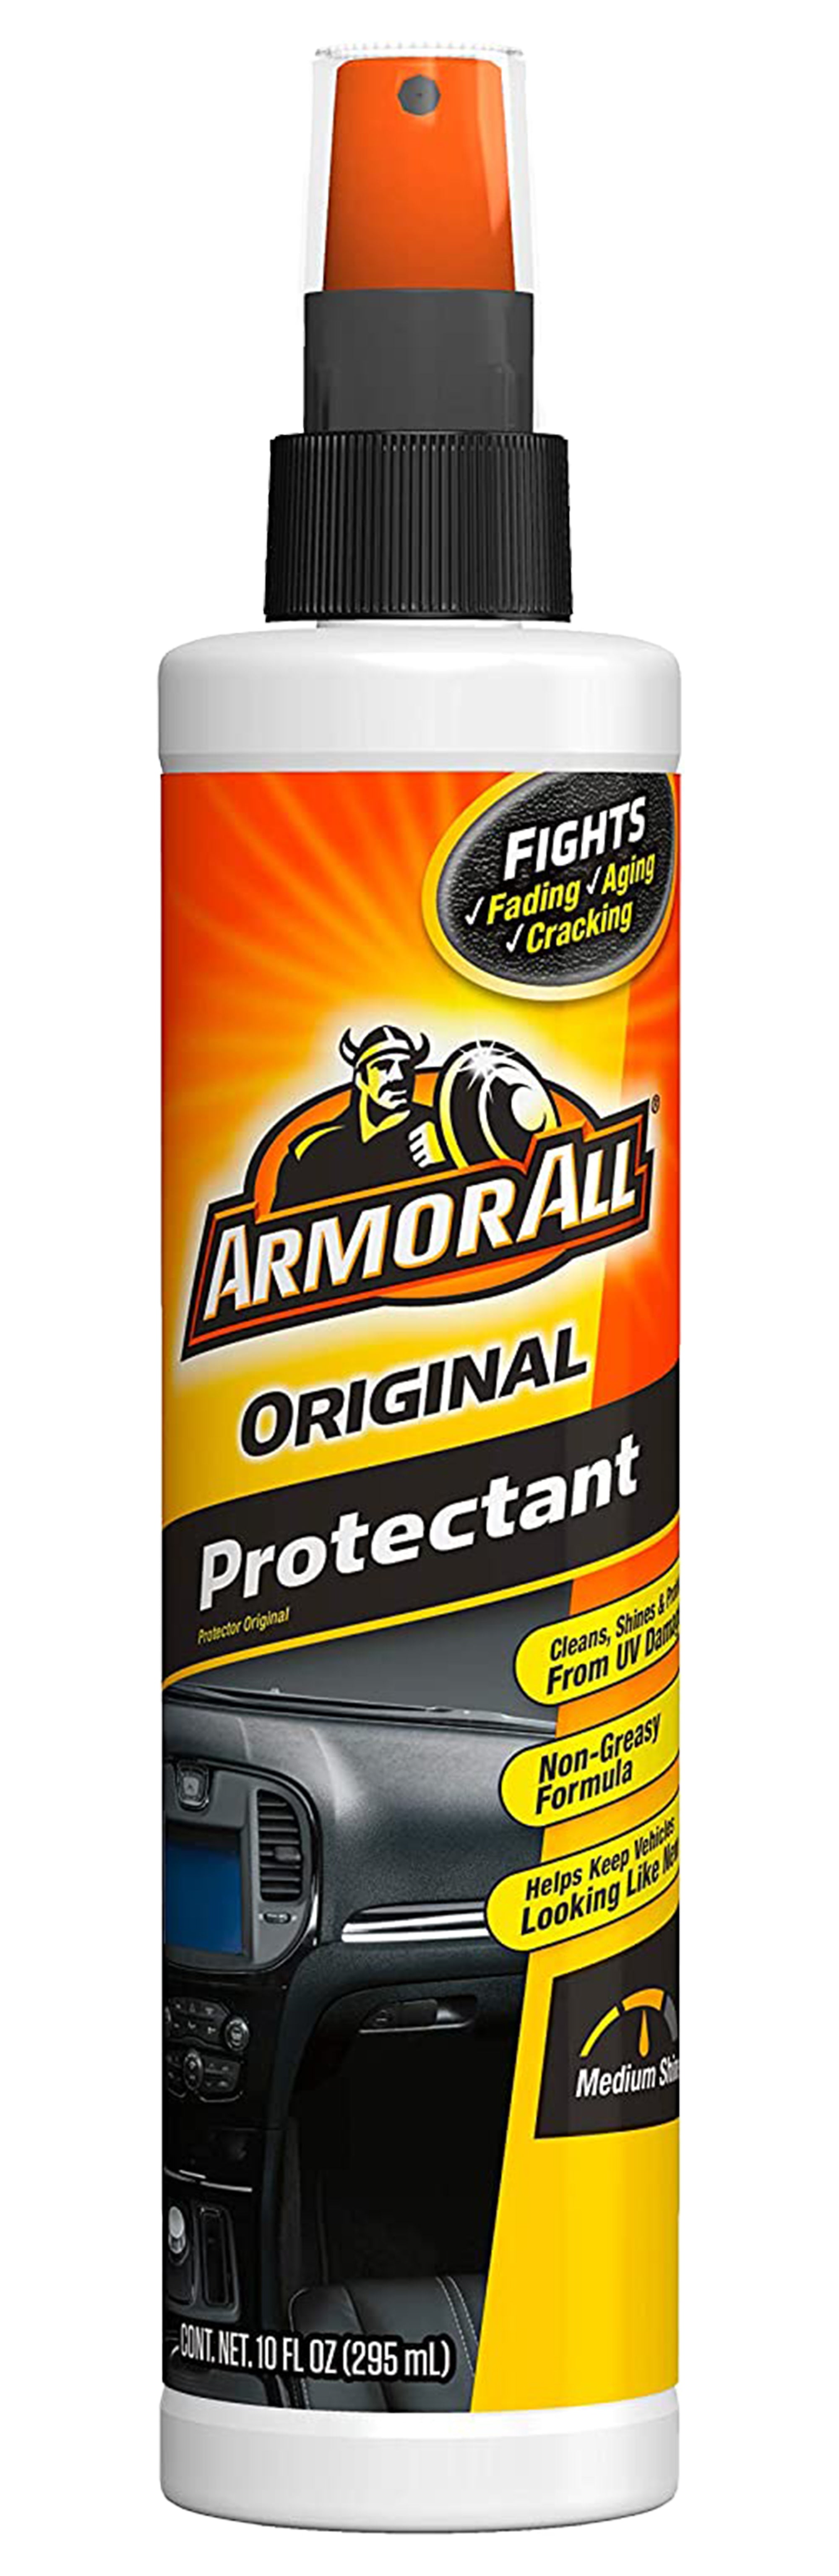 Armor All Armor All Protectant - 10 fl oz bottle